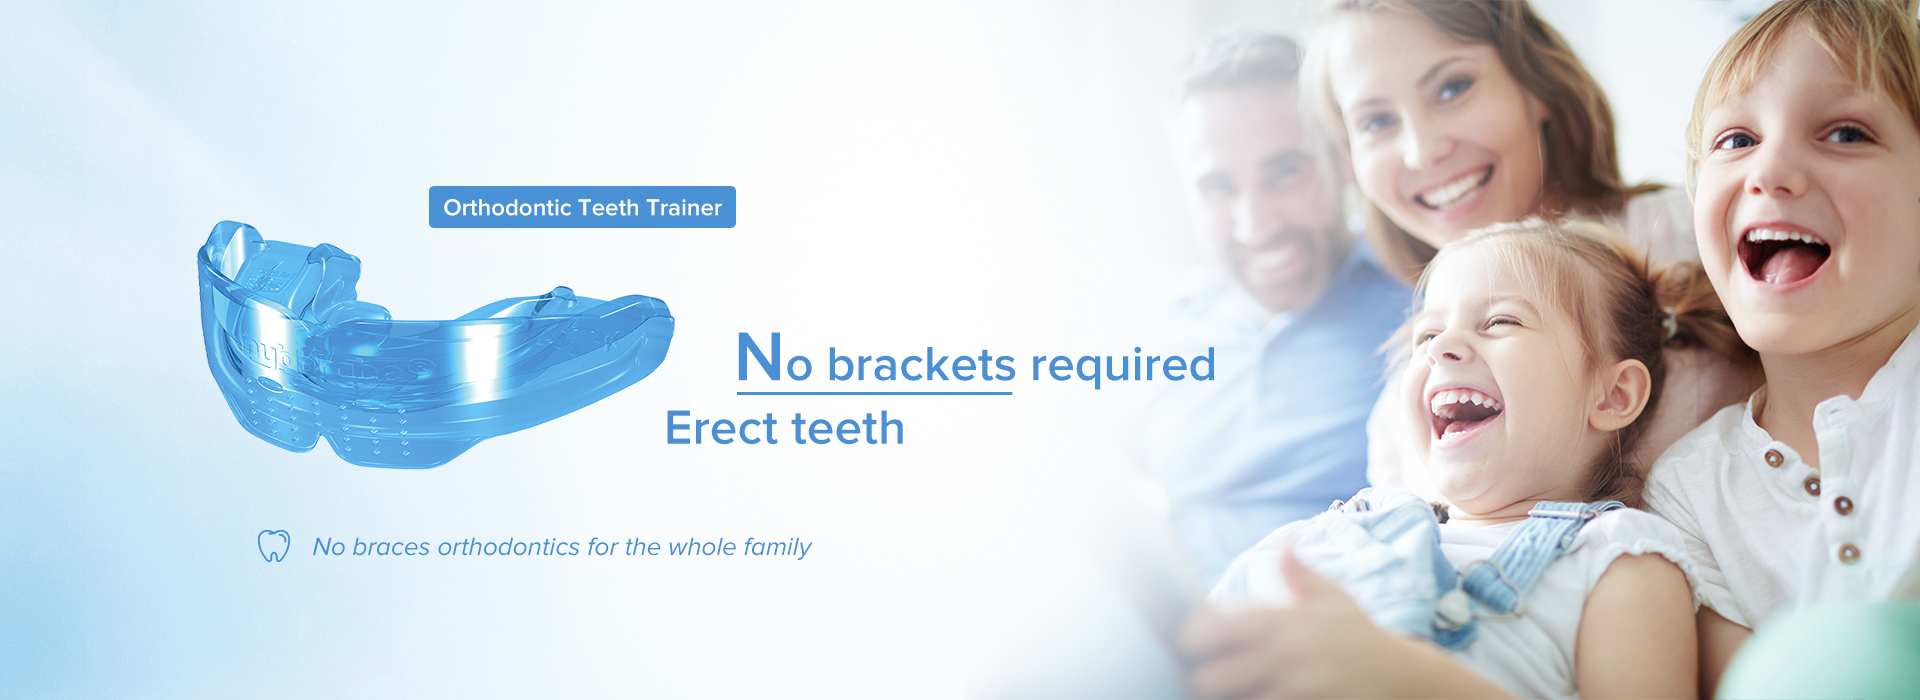 orthodontic teeth trainer appliance